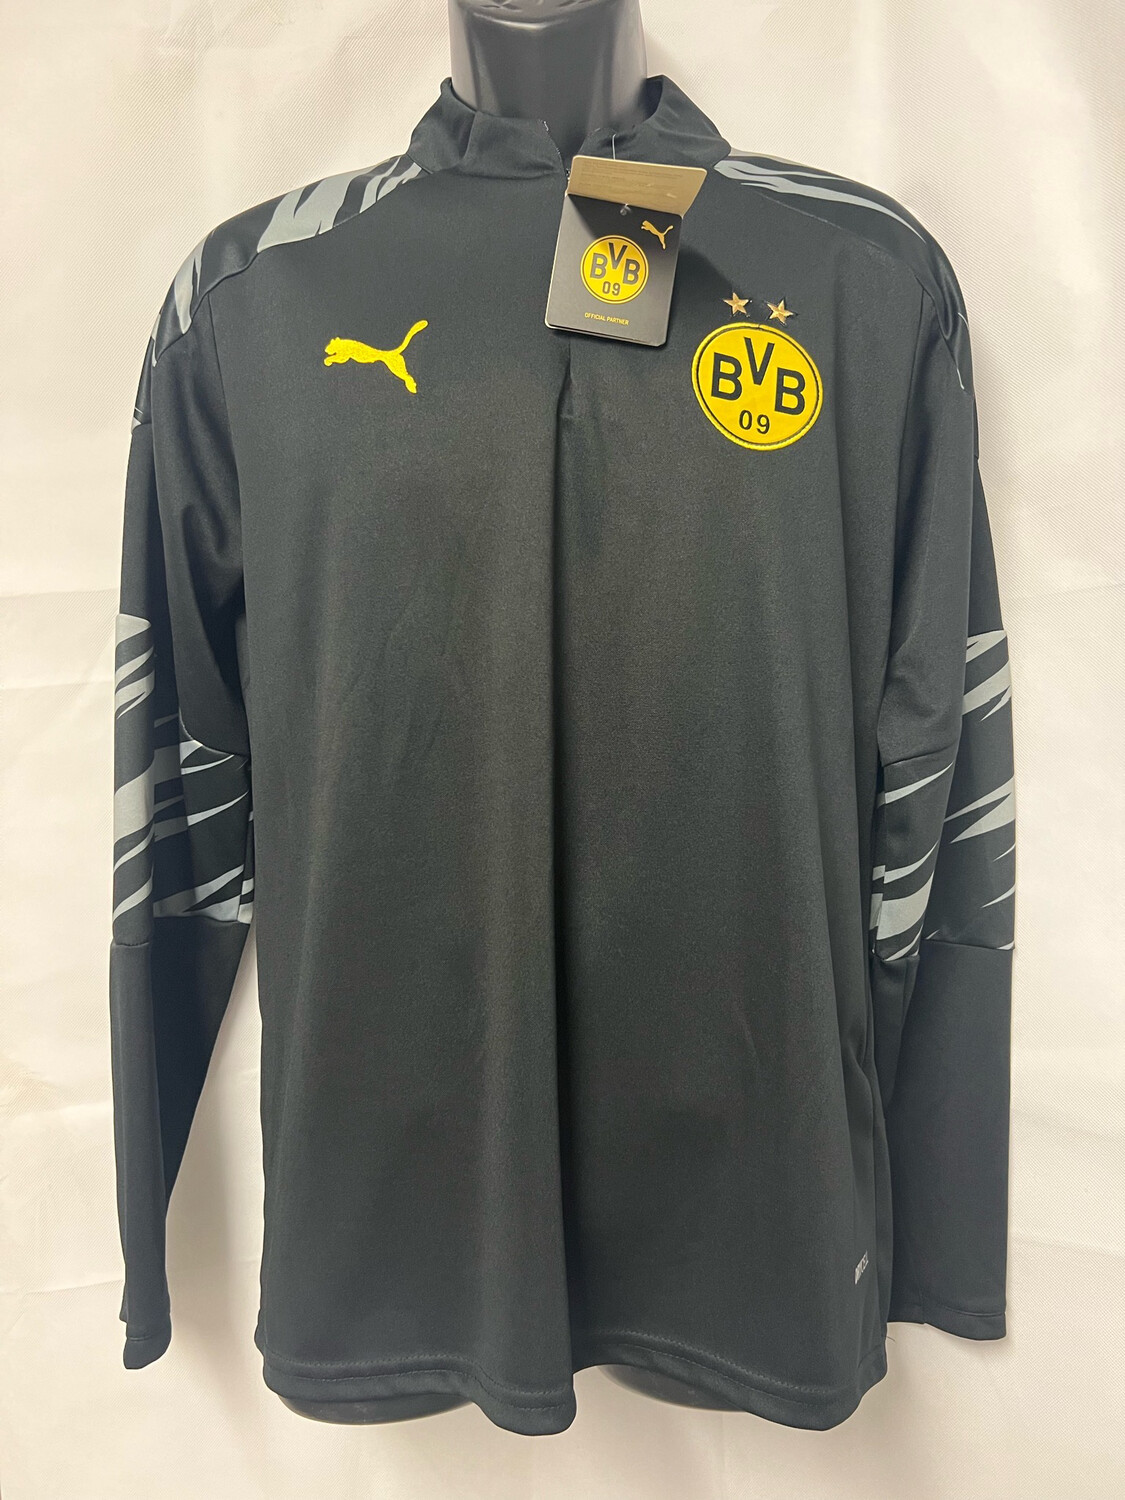 BVB Borussia Dortmund 1/4 training jacket 